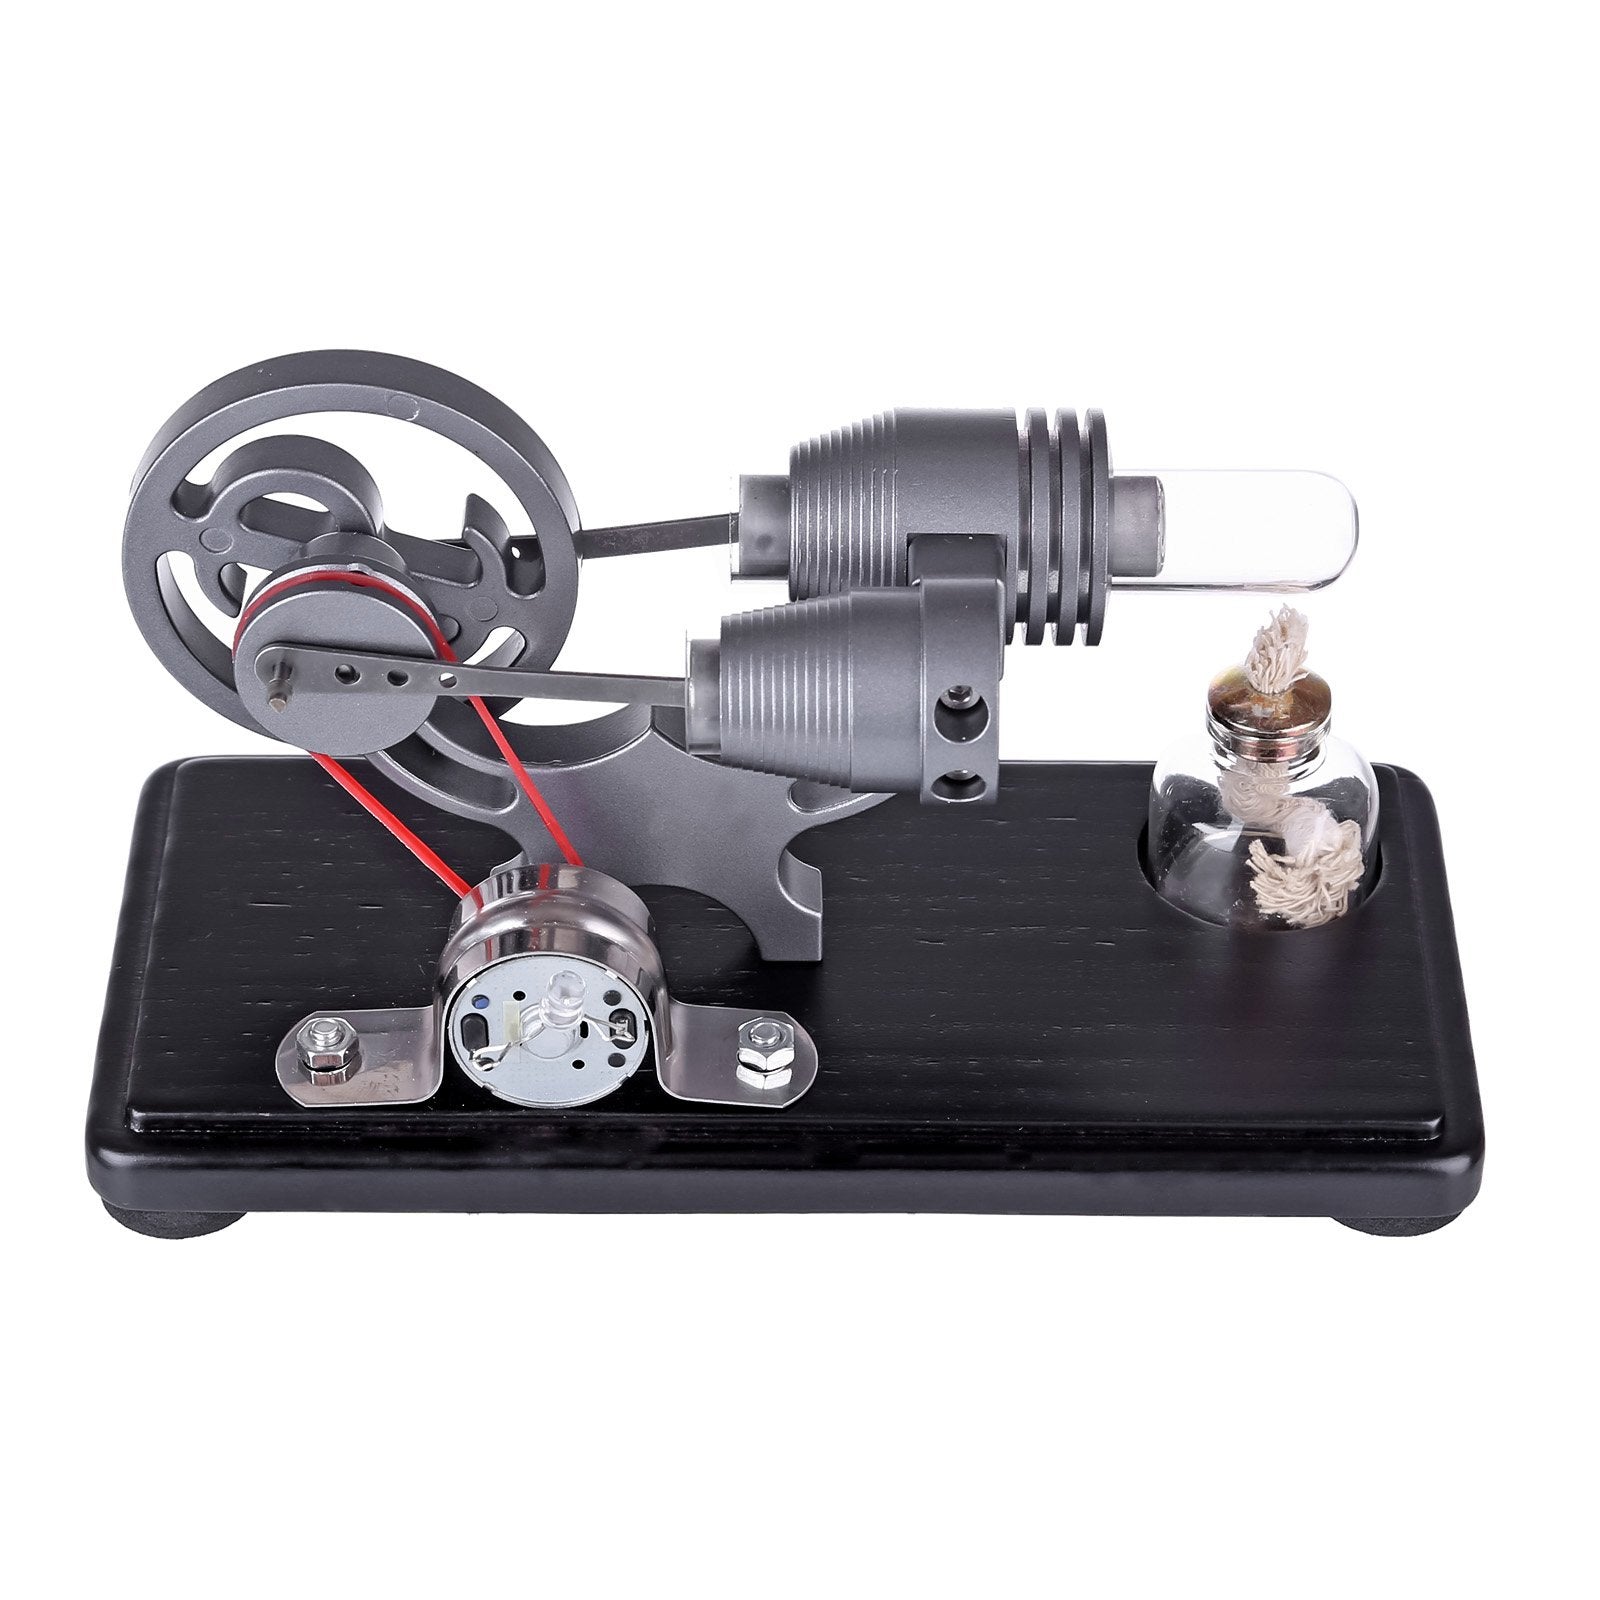 DIY γ-shape Assembly Led Stirling Engine Kit Generator Sterling Model Retro Science Educational Toy